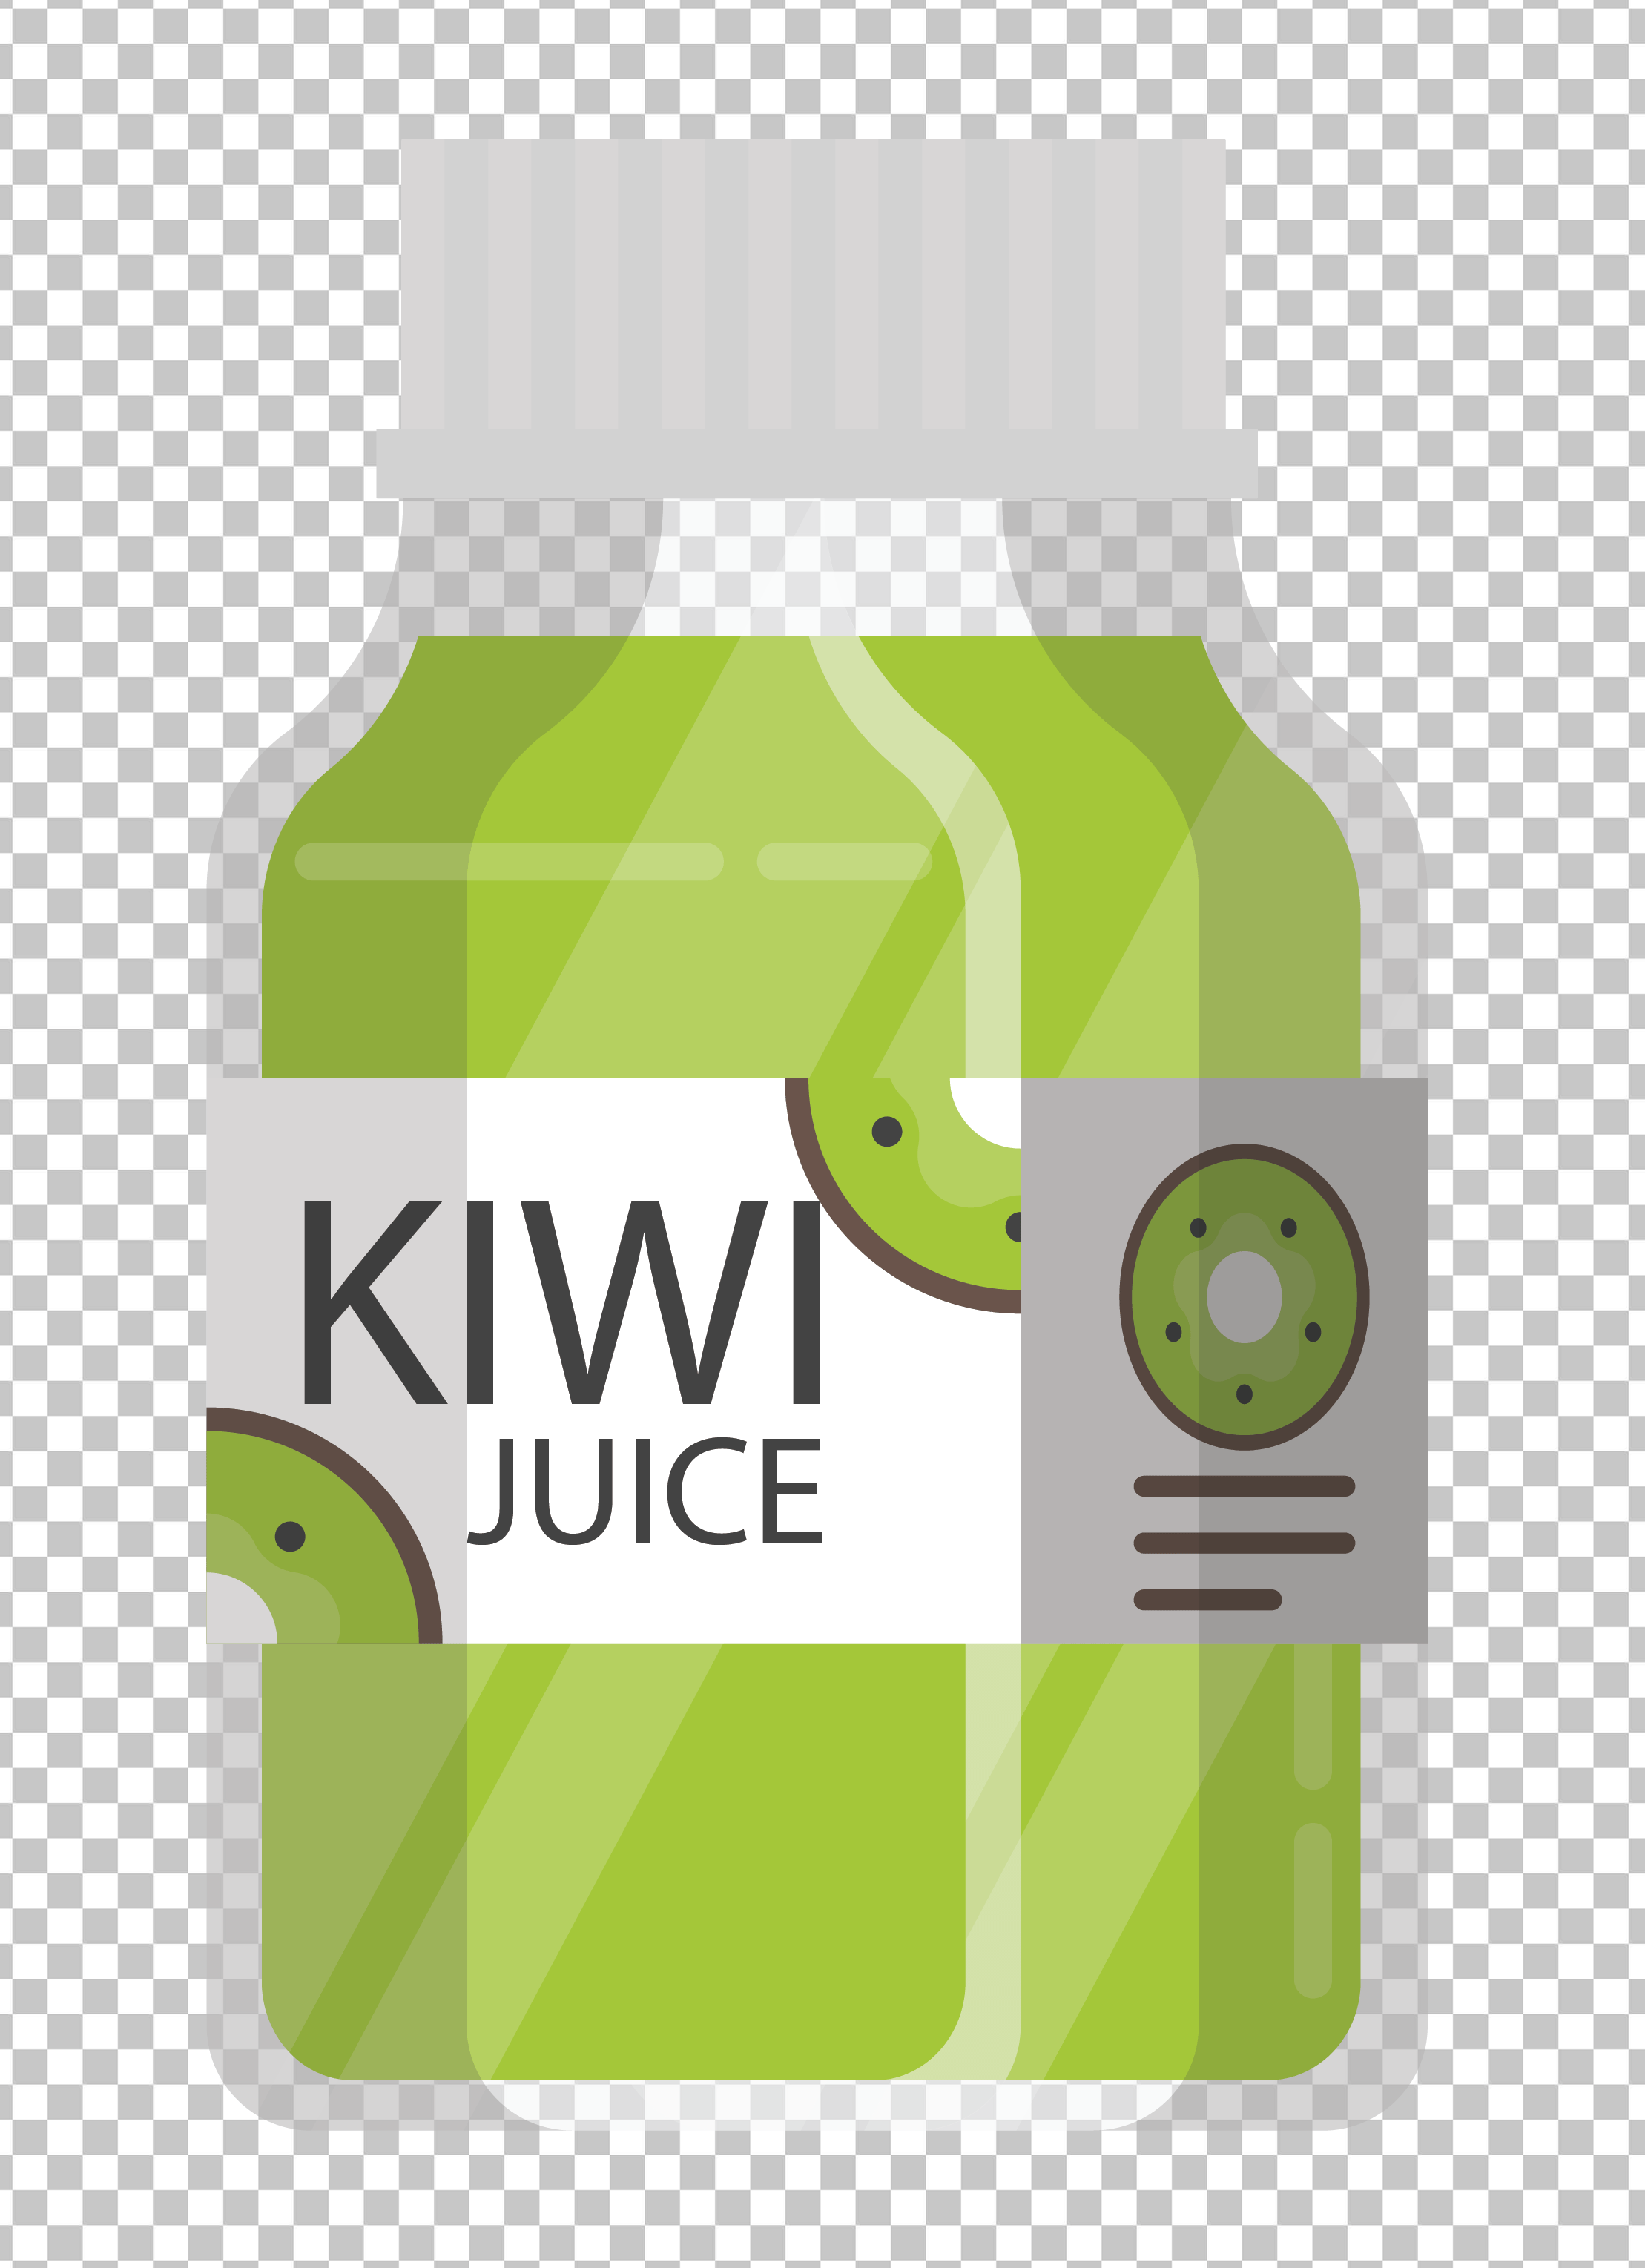 A bottle of kiwi juice on a transparent background.